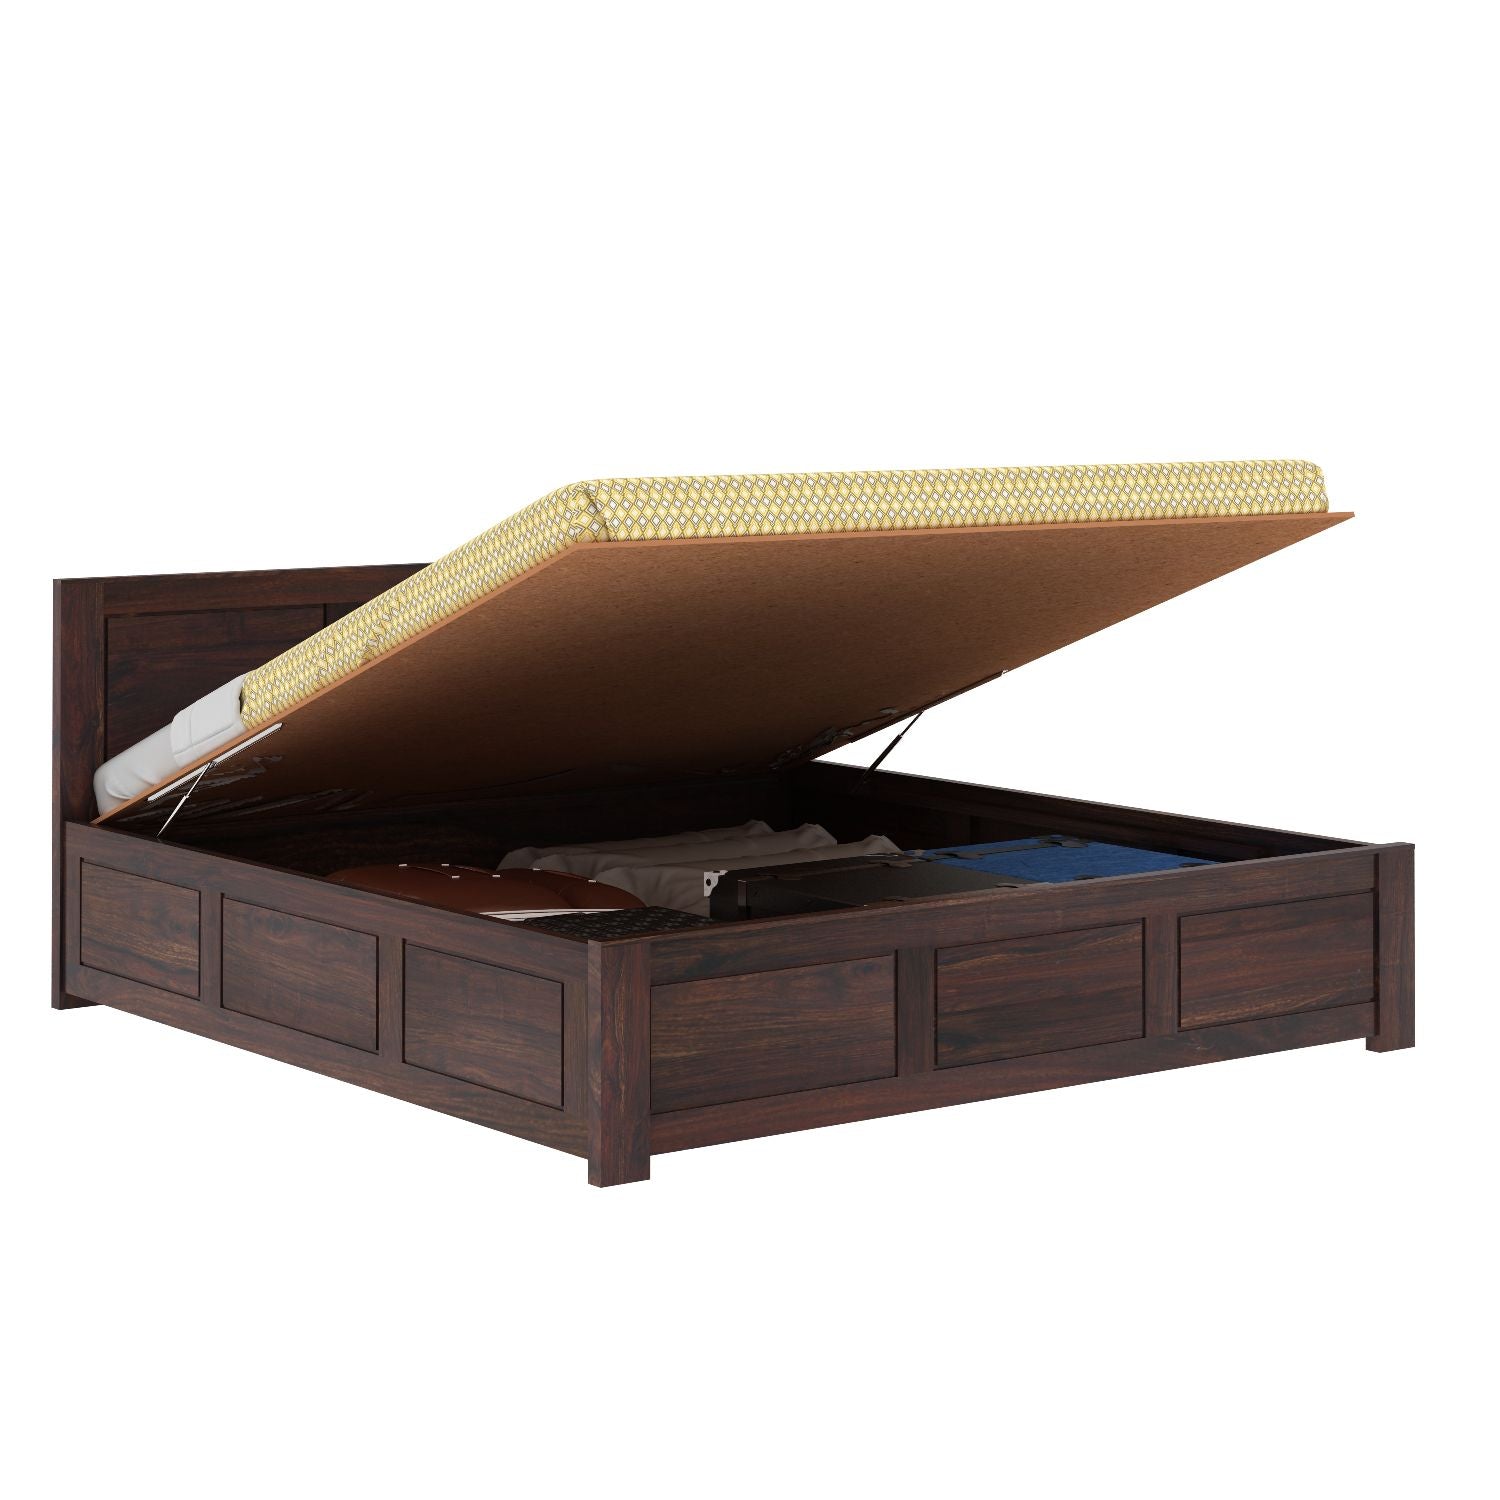 Woodwing Solid Sheesham Wood Hydraulic Bed With Box Storage (King Size, Walnut Finish)